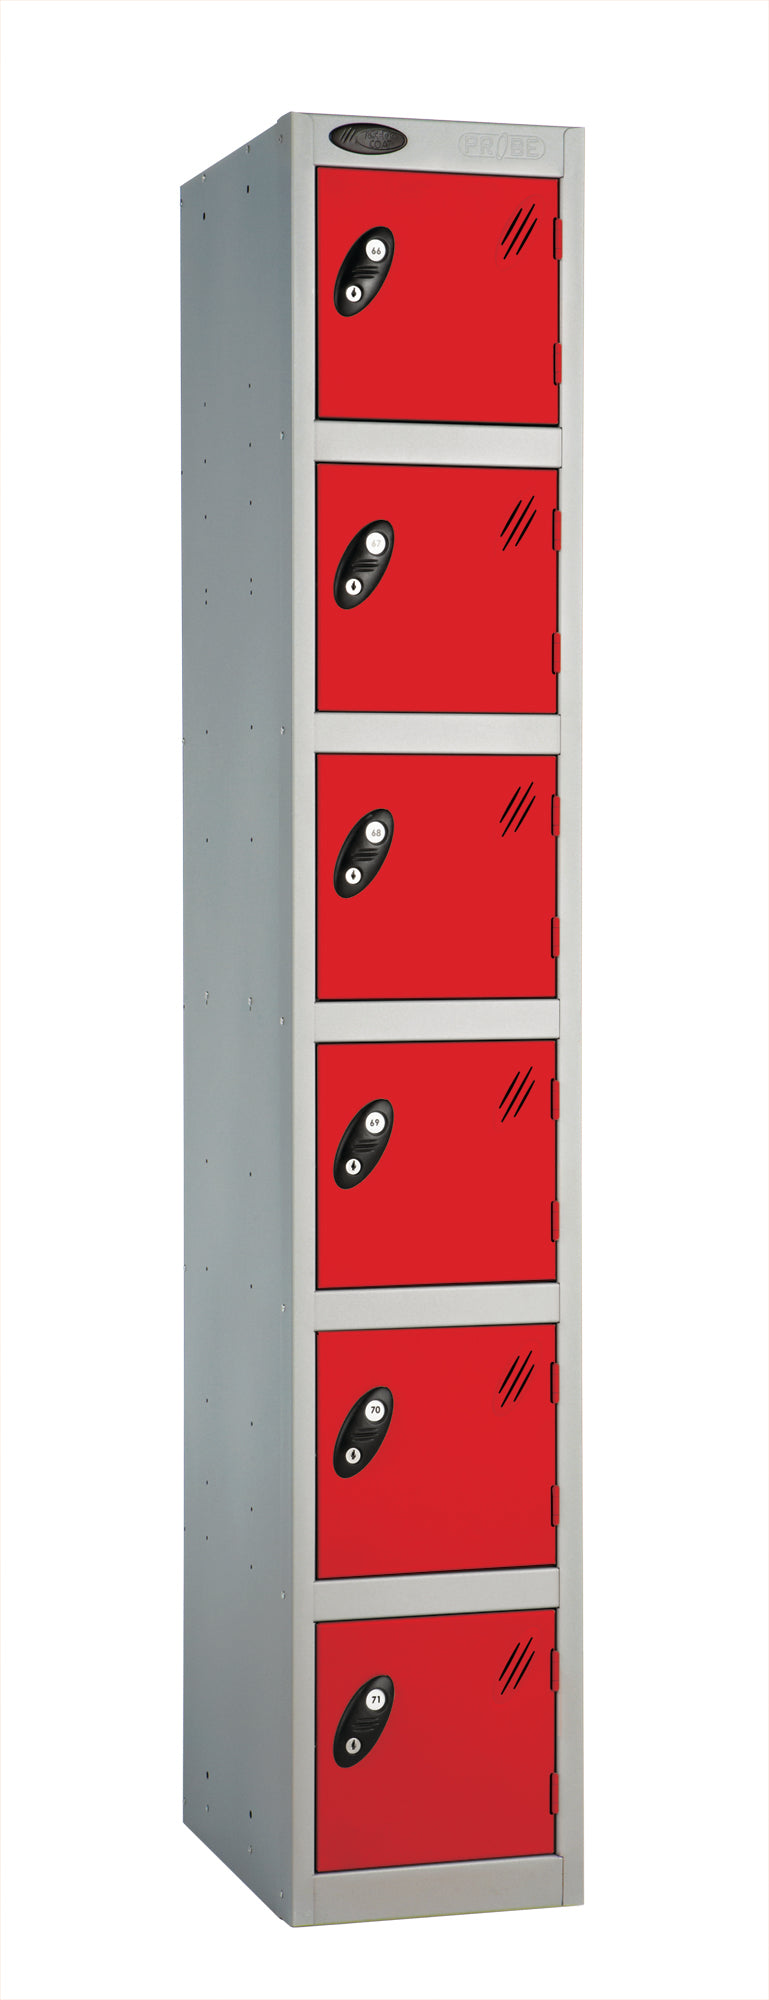 PROBEBOX STANDARD 1 NEST STEEL LOCKERS - FLAME RED 6 DOOR Storage Lockers > Lockers > Cabinets > Storage > Probe > One Stop For Safety   